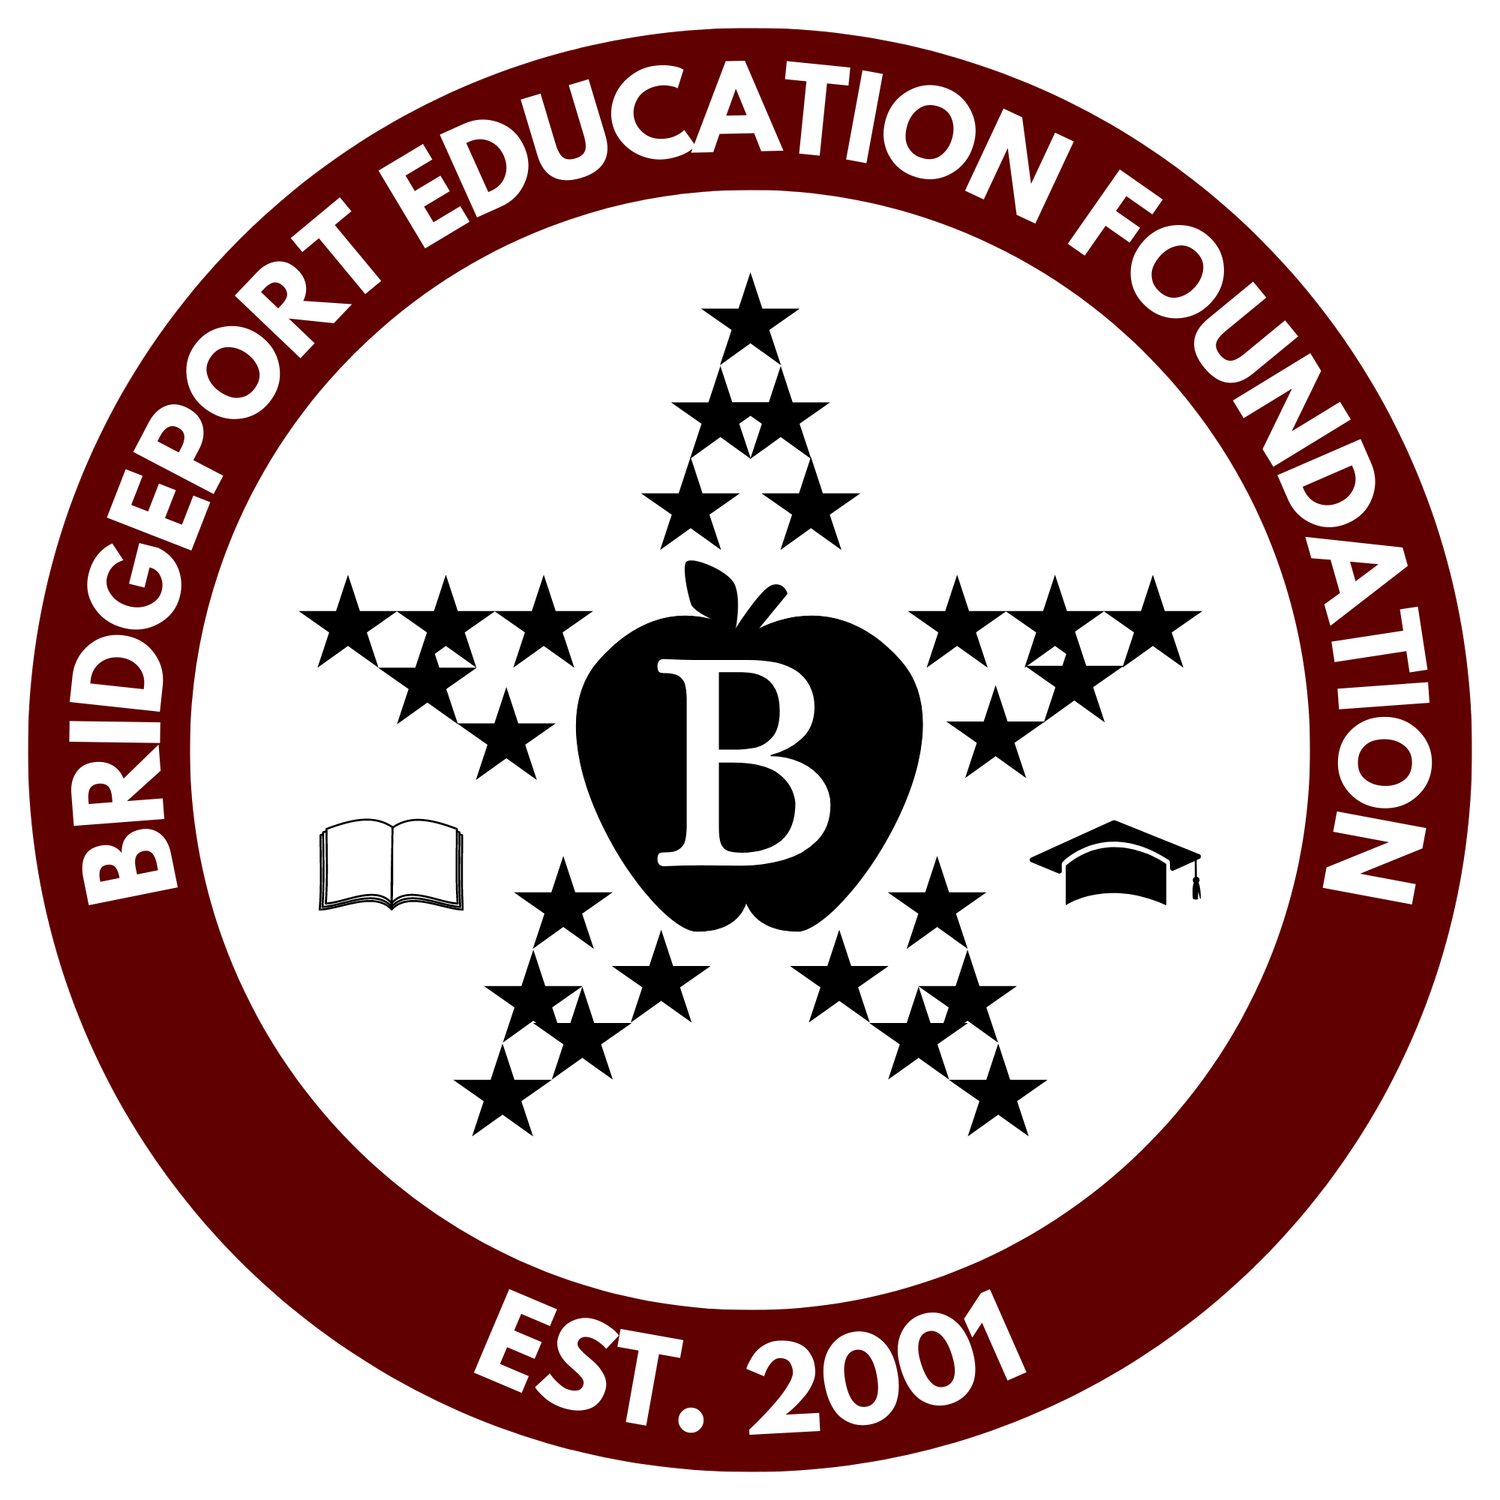 Bridgeport Education Foundation